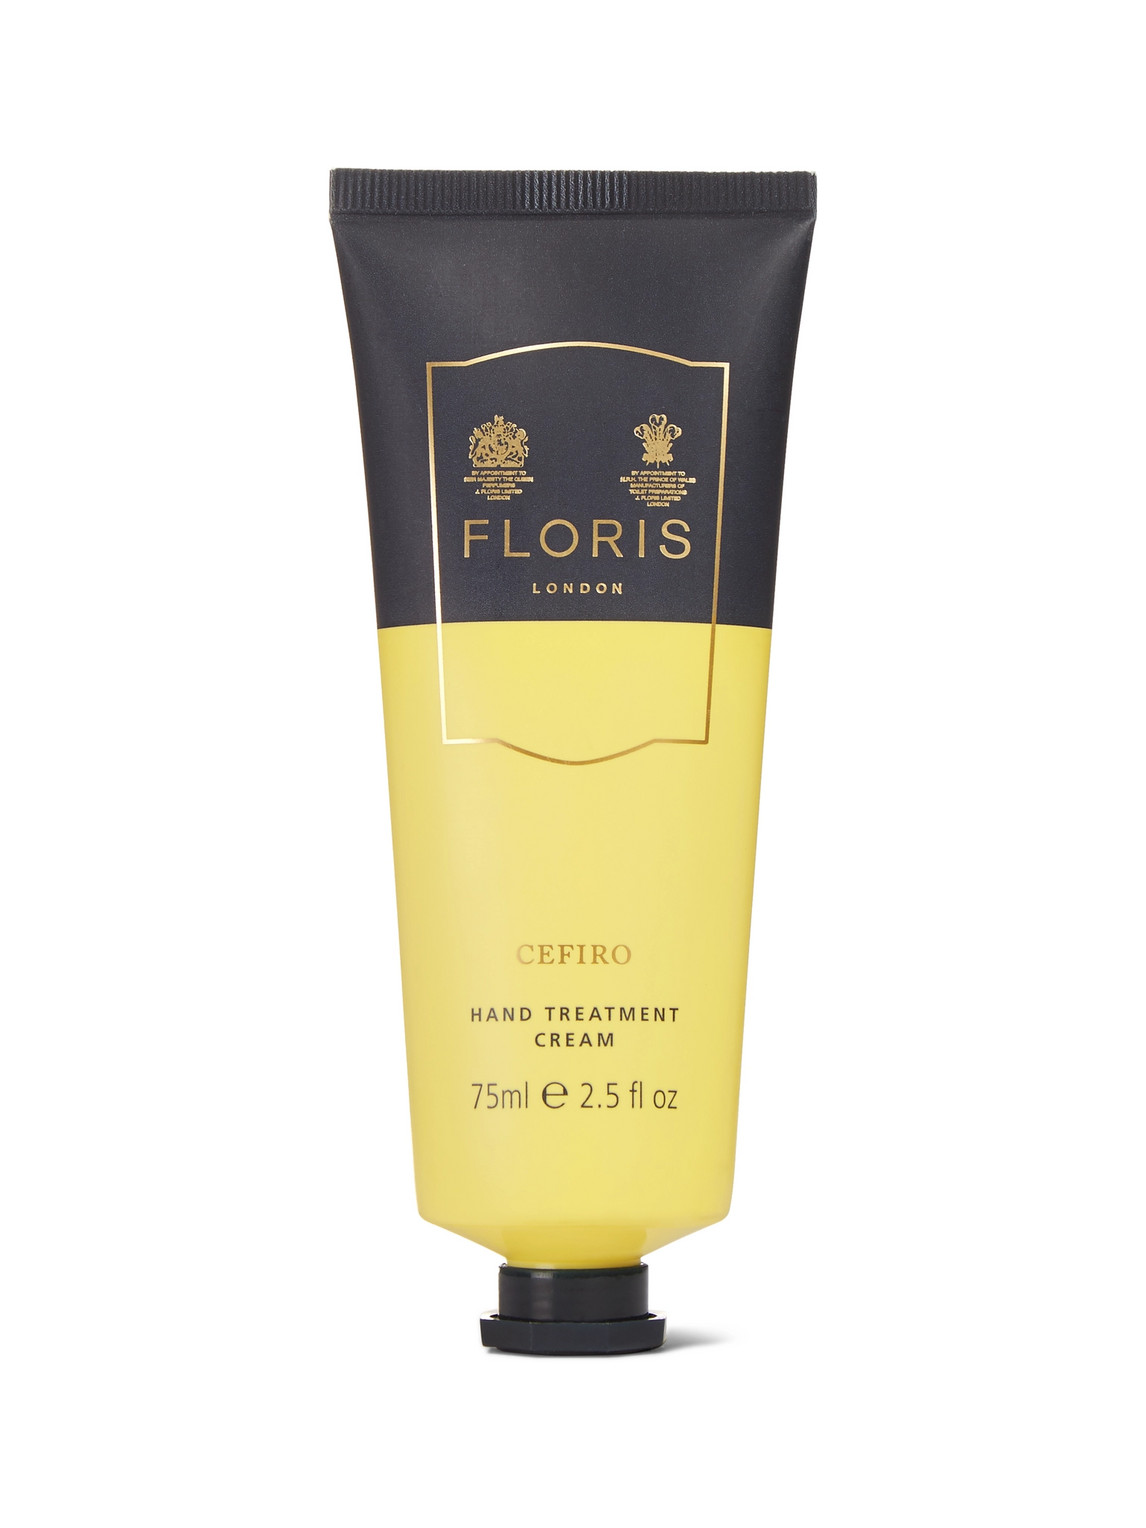 Floris London Cefiro Hand Treatment Cream, 75ml